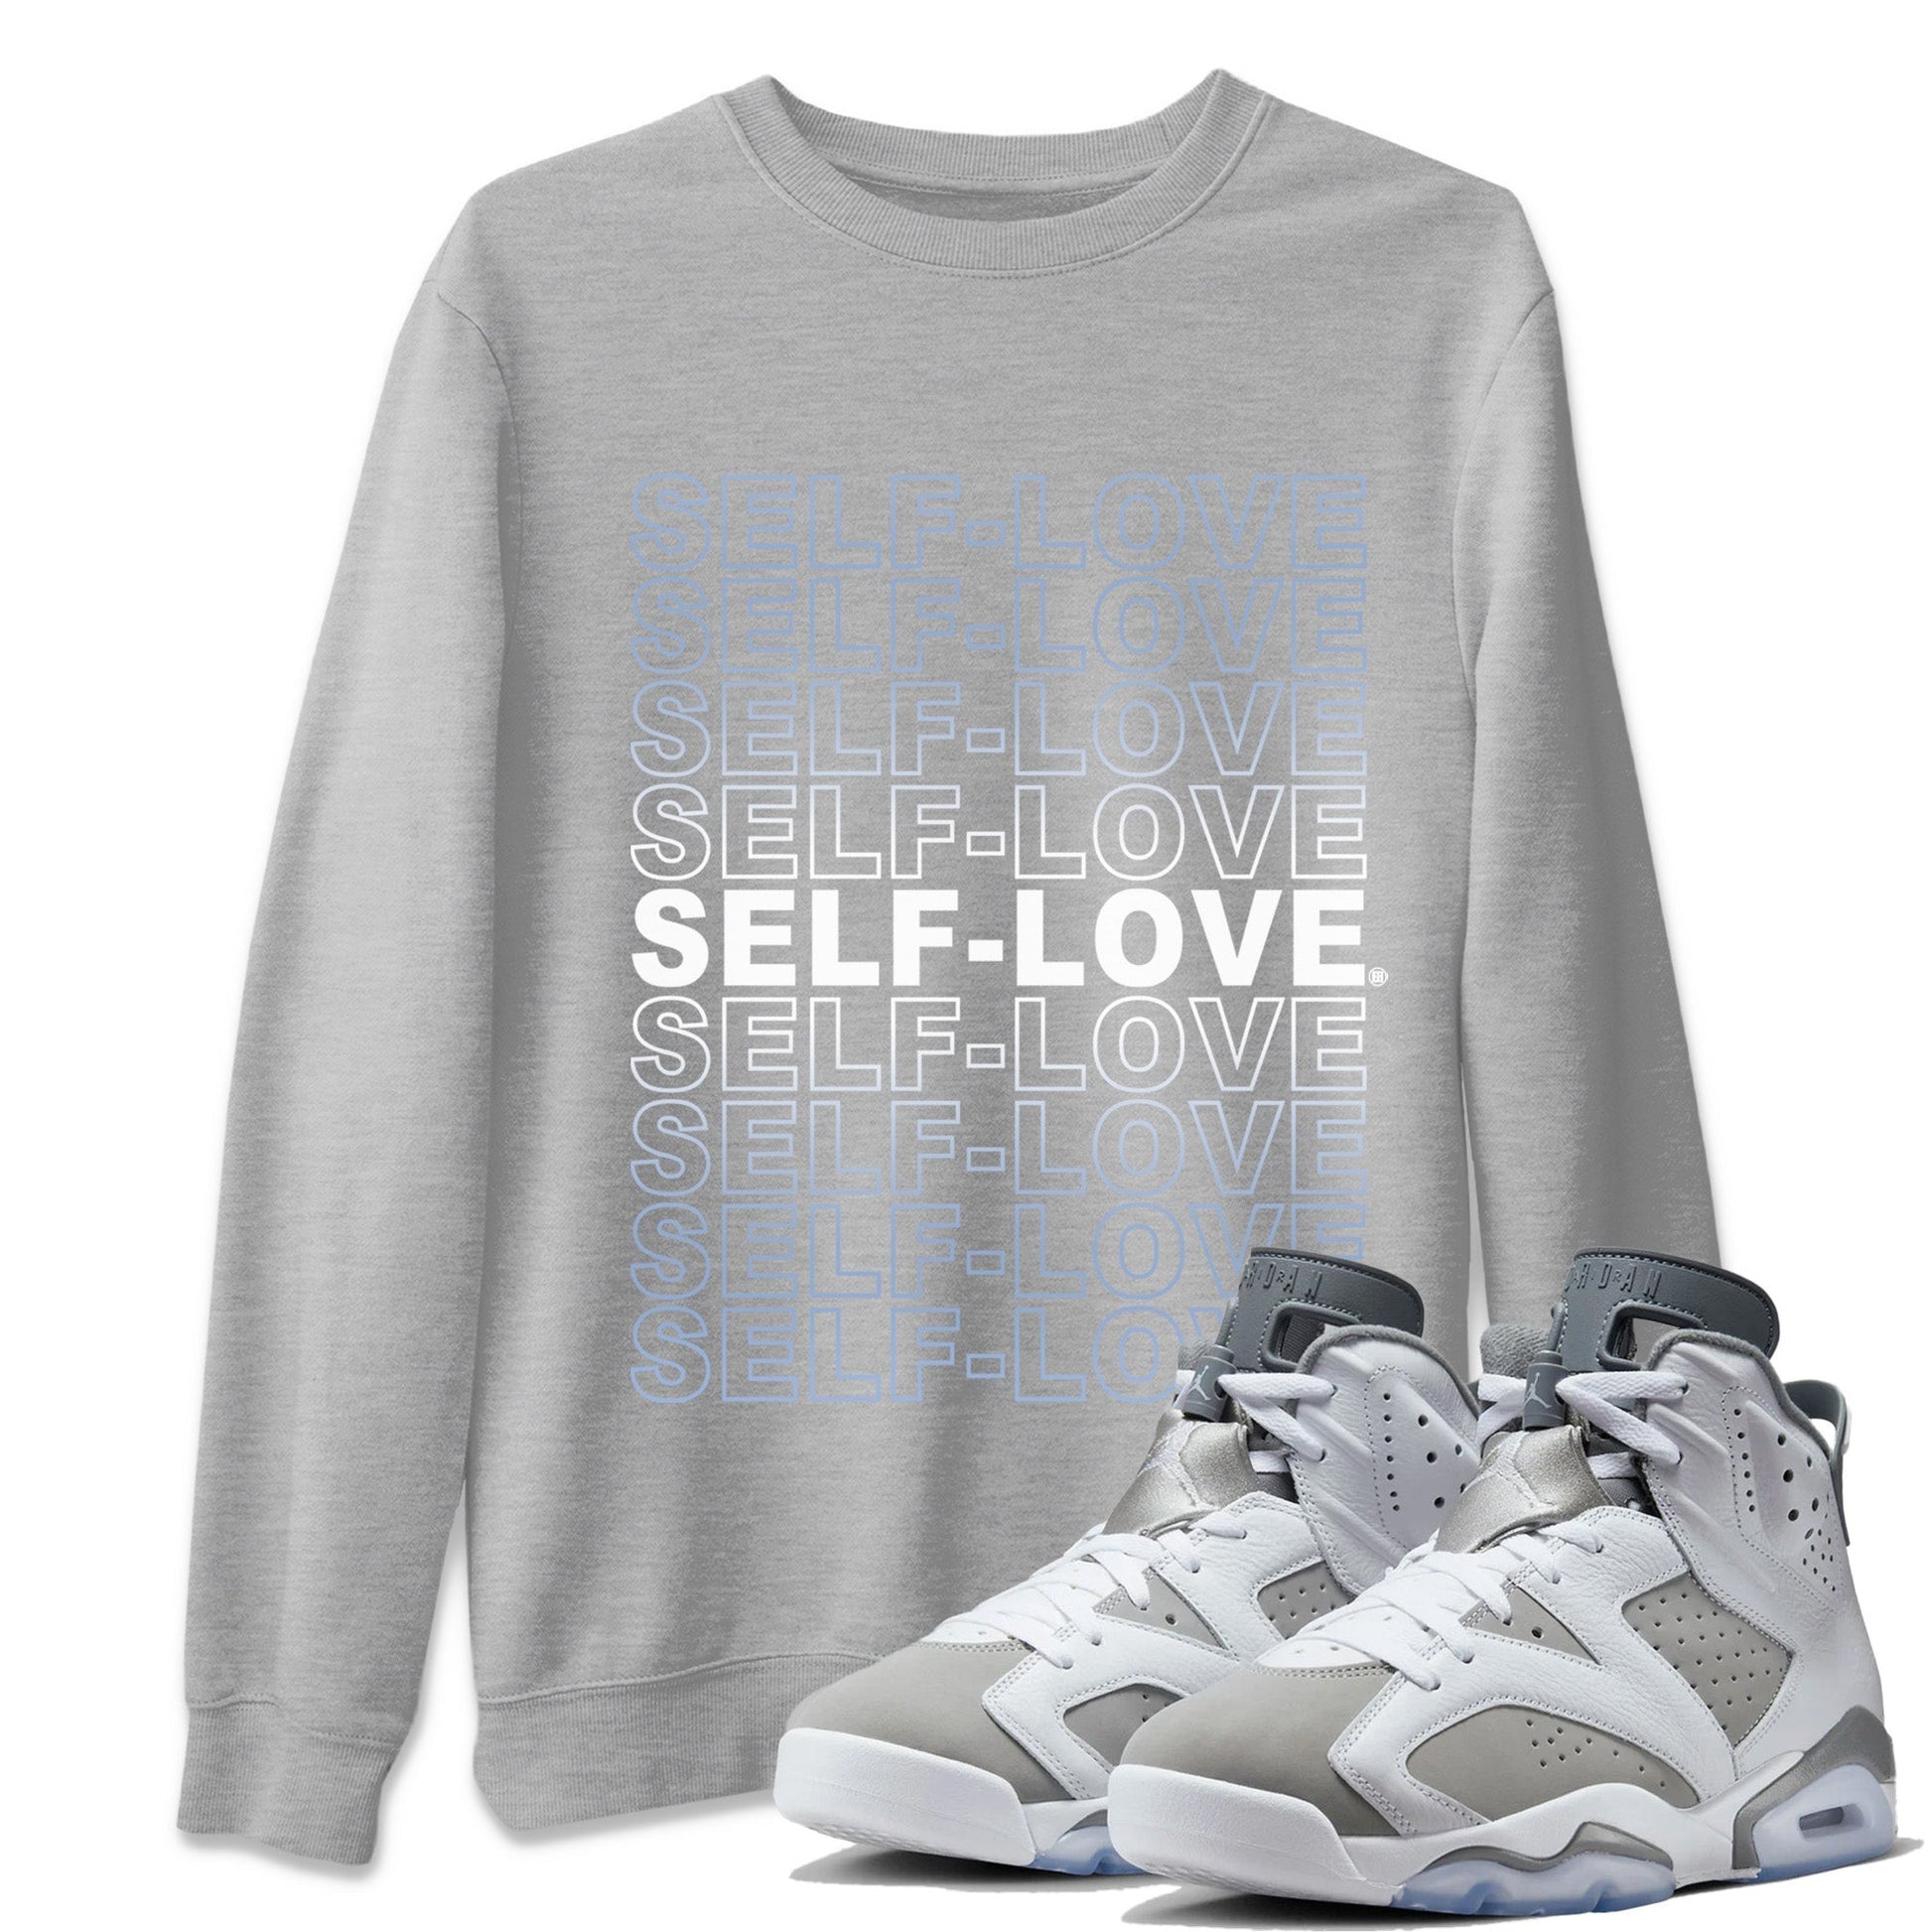 Jordan 6 Cool Grey Sneaker Match Tees Self Love Sneaker Tees Jordan 6 Cool Grey Sneaker Release Tees Unisex Shirts